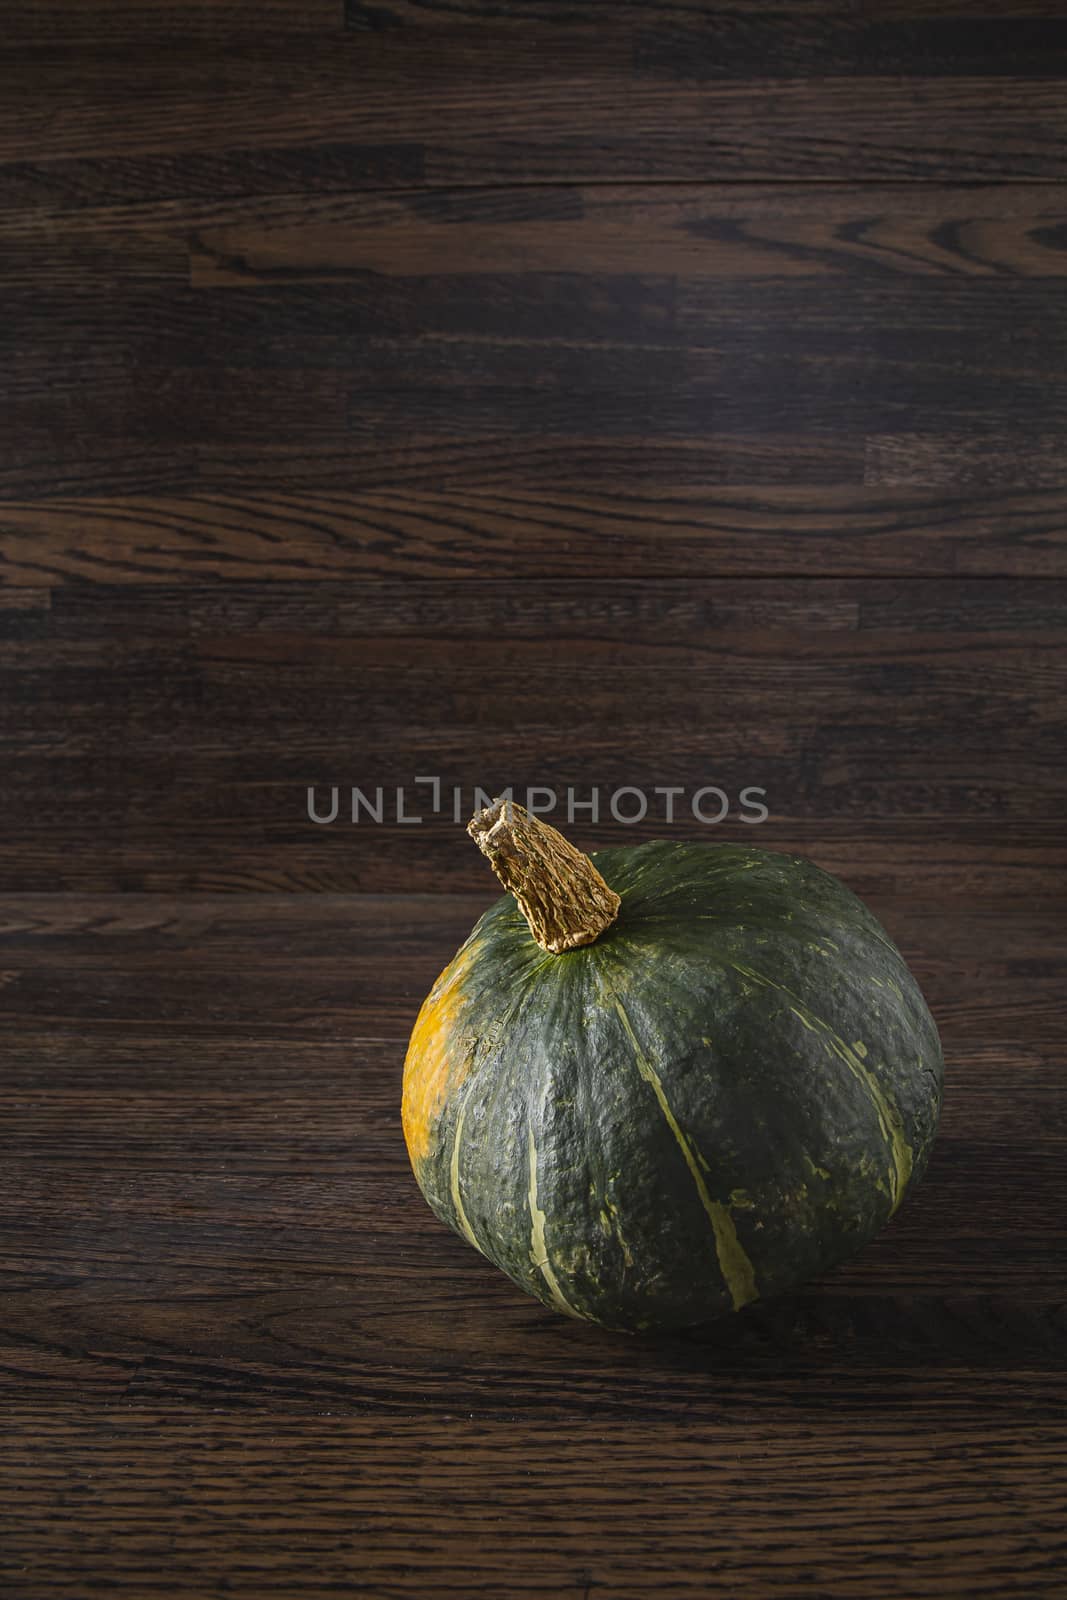 single Kabocha squash against a dark wood background